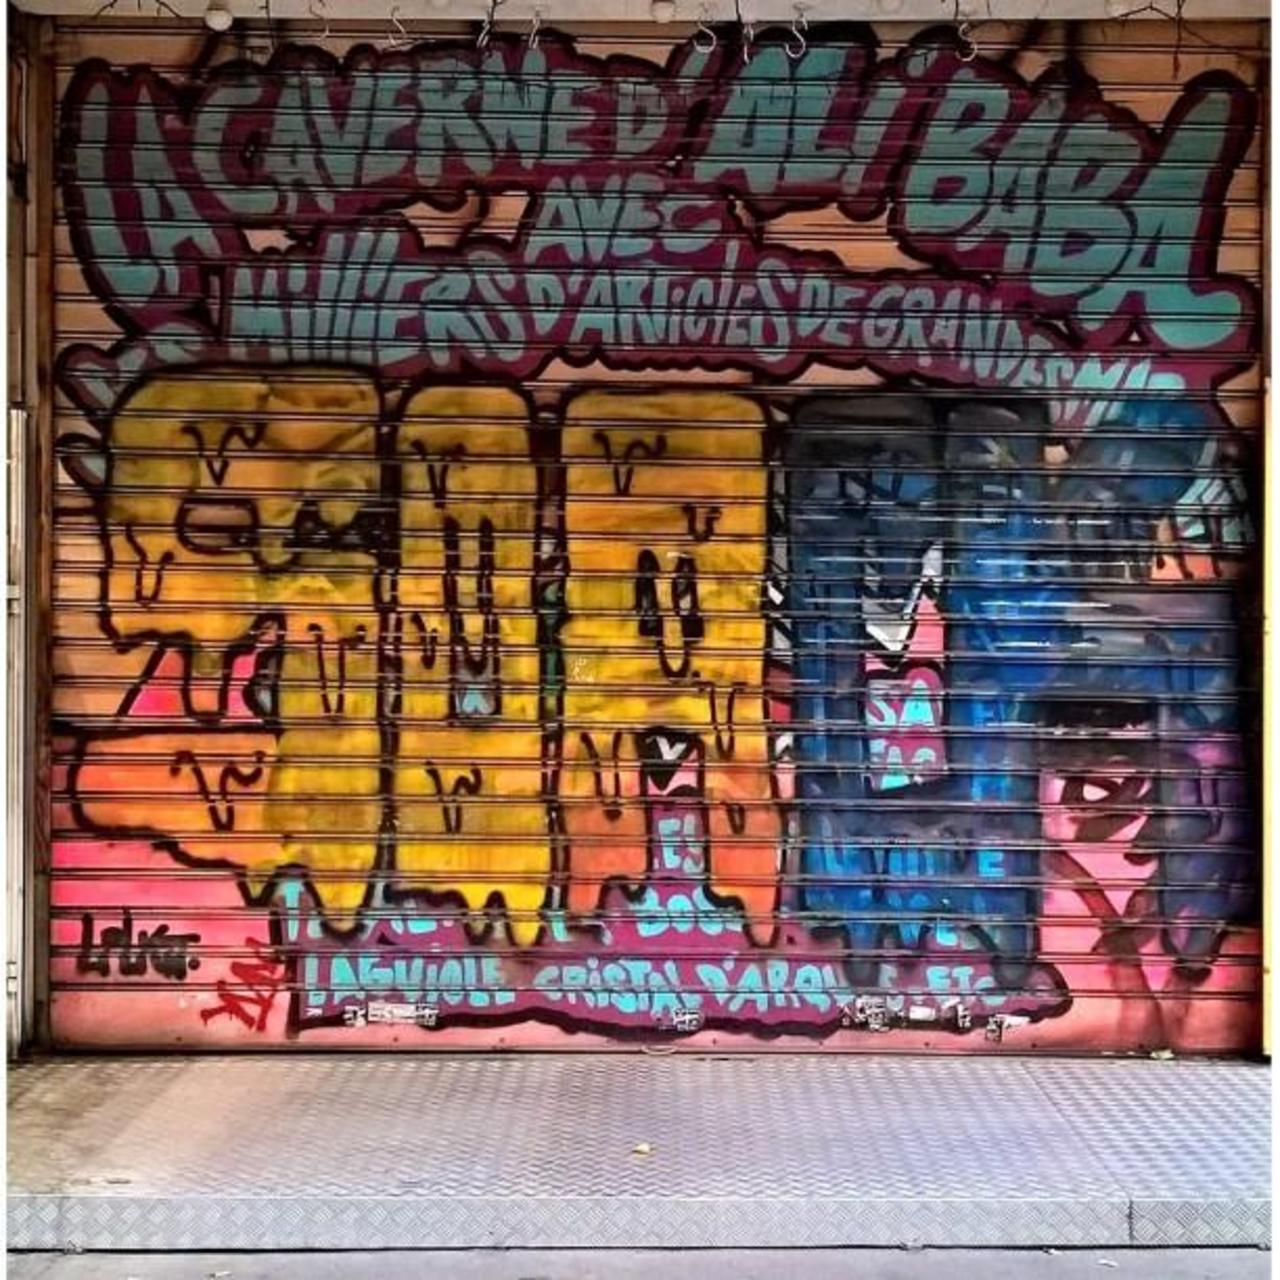 SOACK
#streetart #graffiti #graff #art #fatcap #bombing #sprayart #spraycanart #wallart #handstyle #lettering #urba… http://t.co/lvR9ZAgXLx